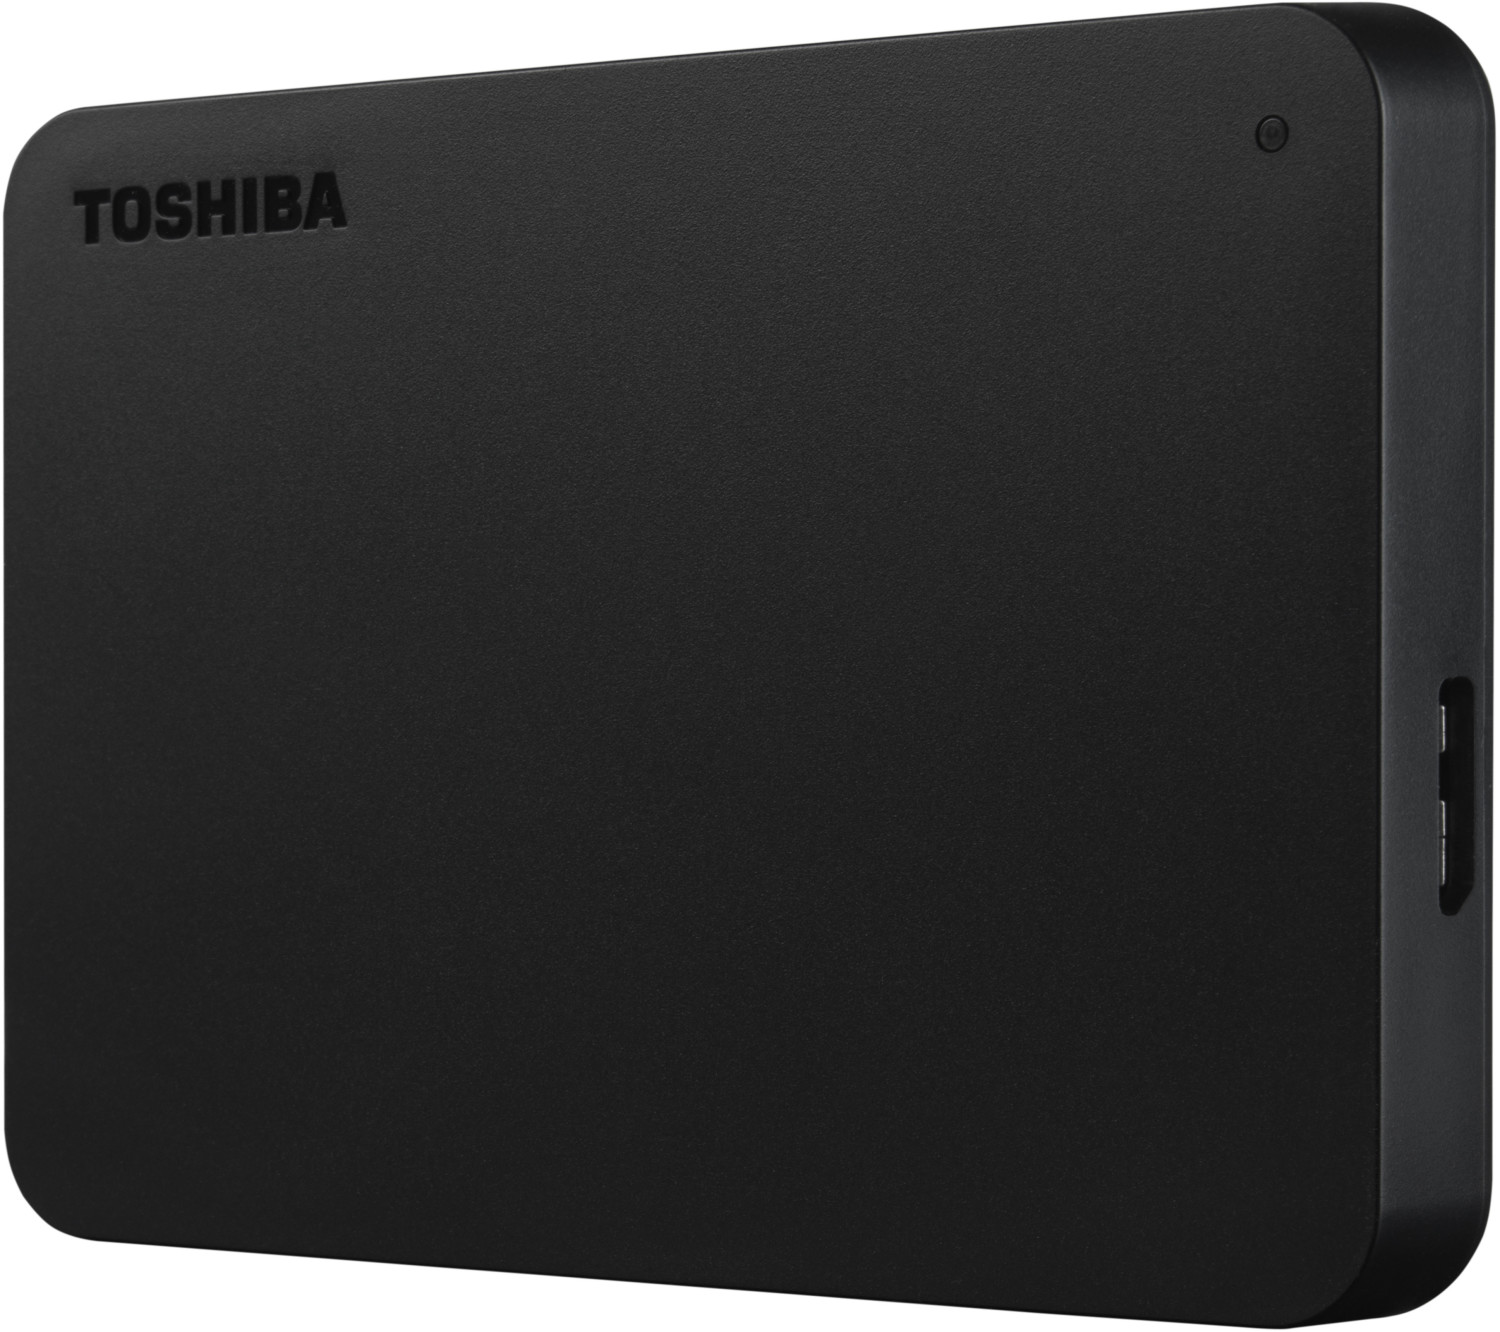 HDTB410EK3AA, Toshiba DAT External Storage Drive Canvio Basics HDD 1TB